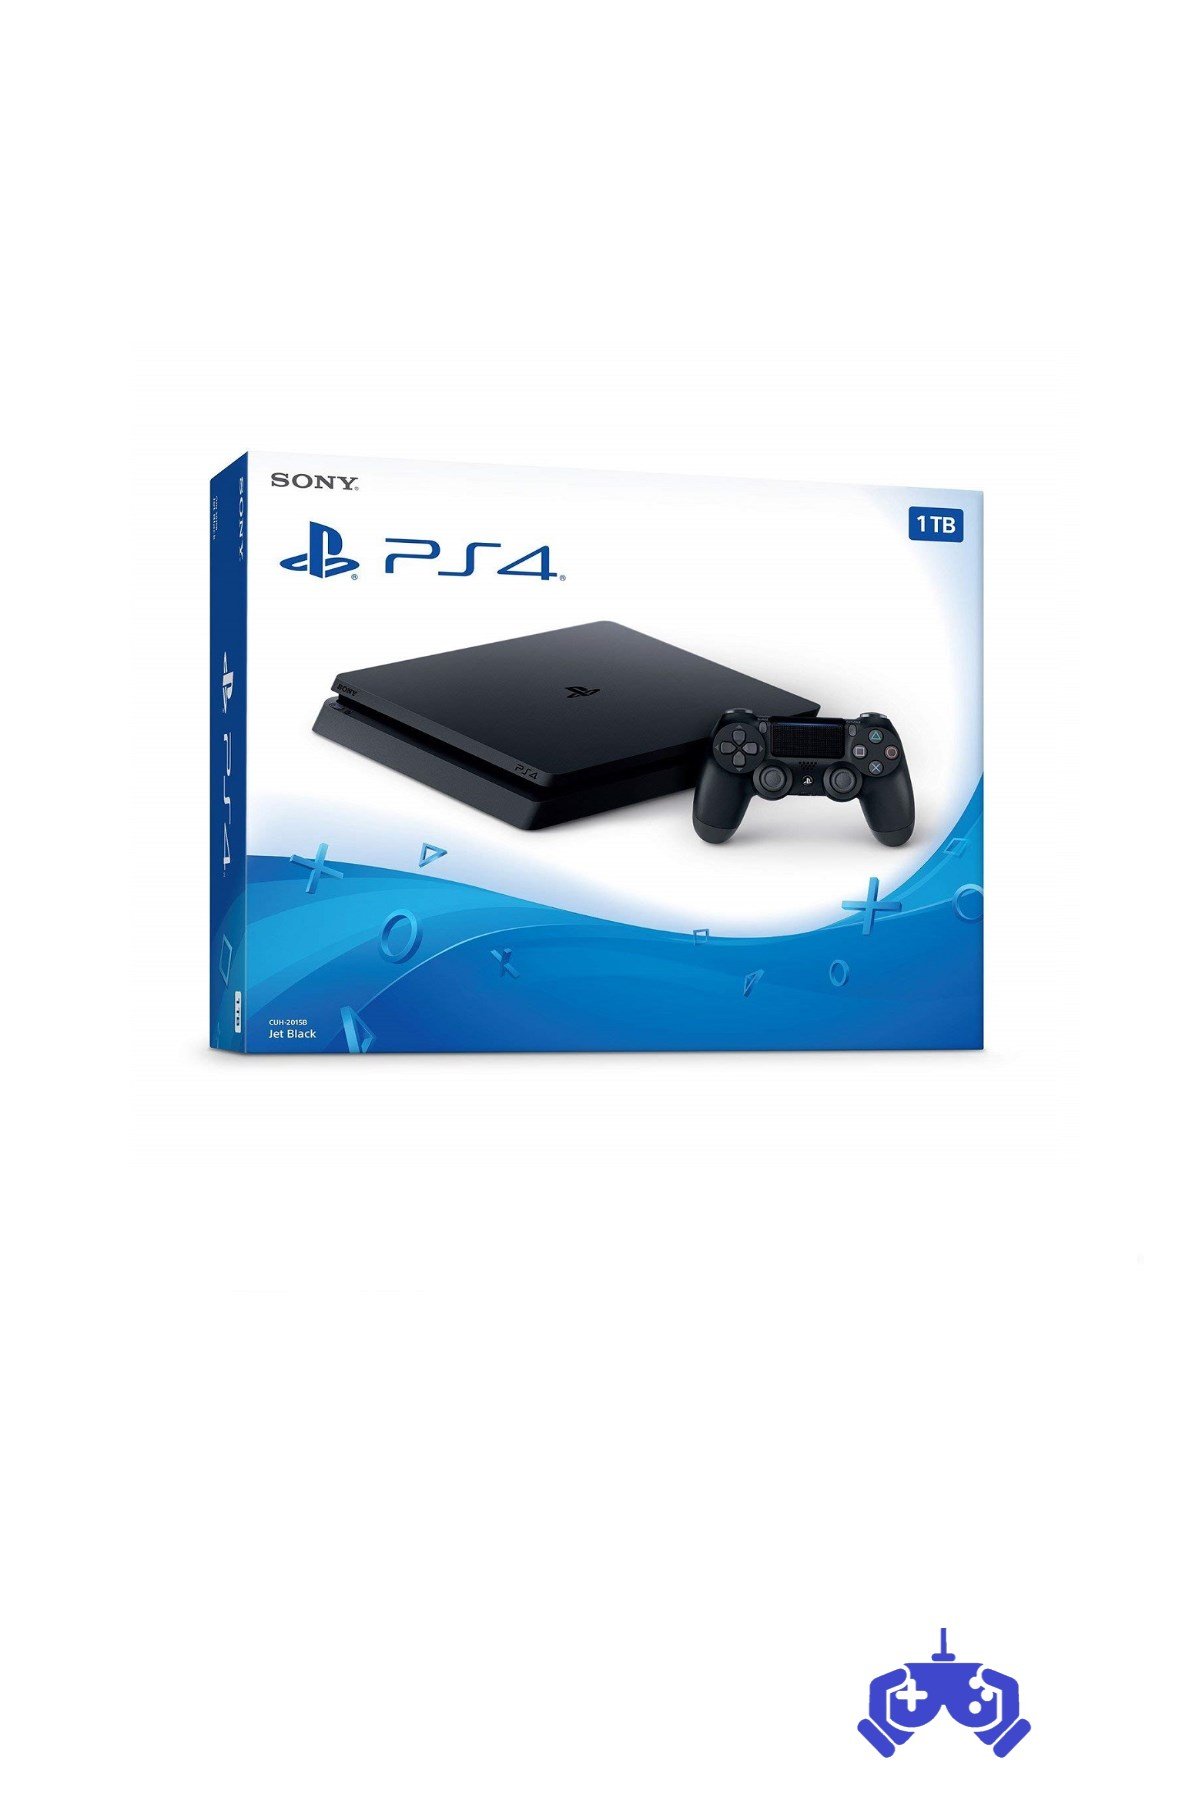 Sony Playstation 4 Ps4 Slim 1 TB Tek Kol 2.El En Ucuz Fiyatıyla Start Oyunda